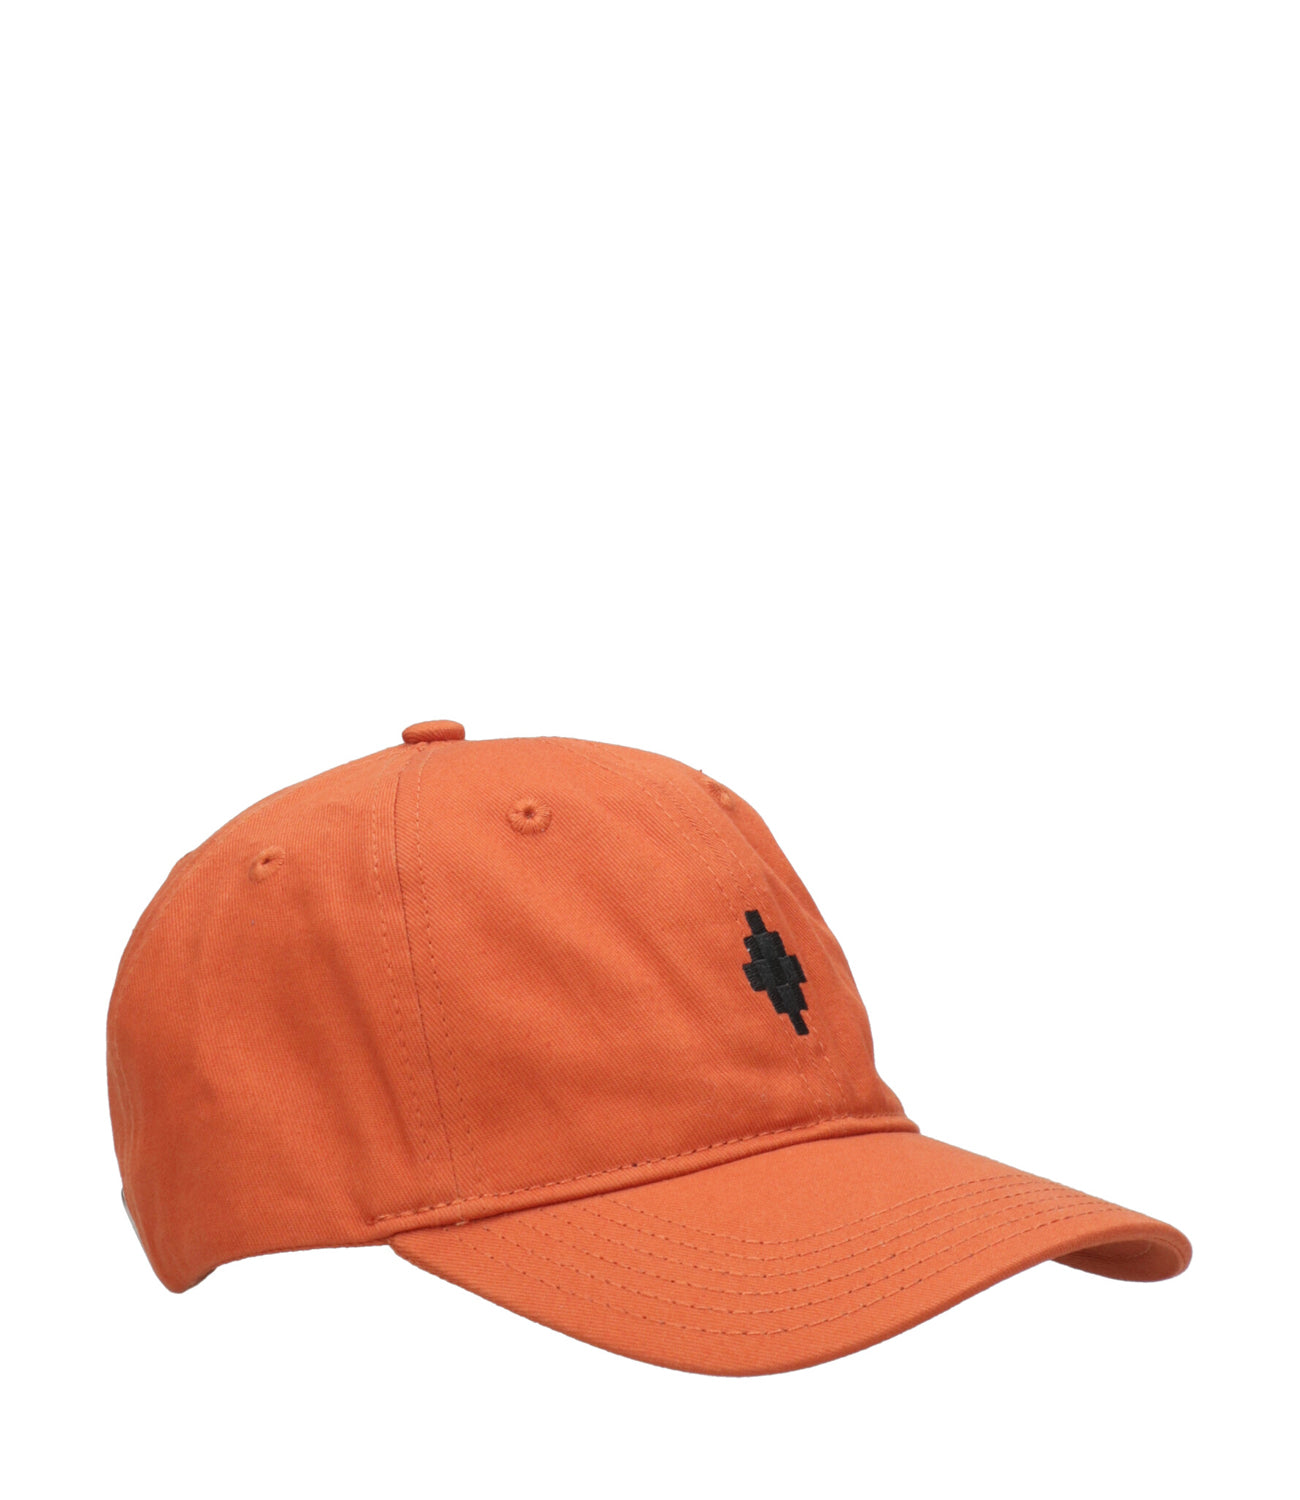 Marcelo Burlon | Cross Baseball Hat Orange and Black